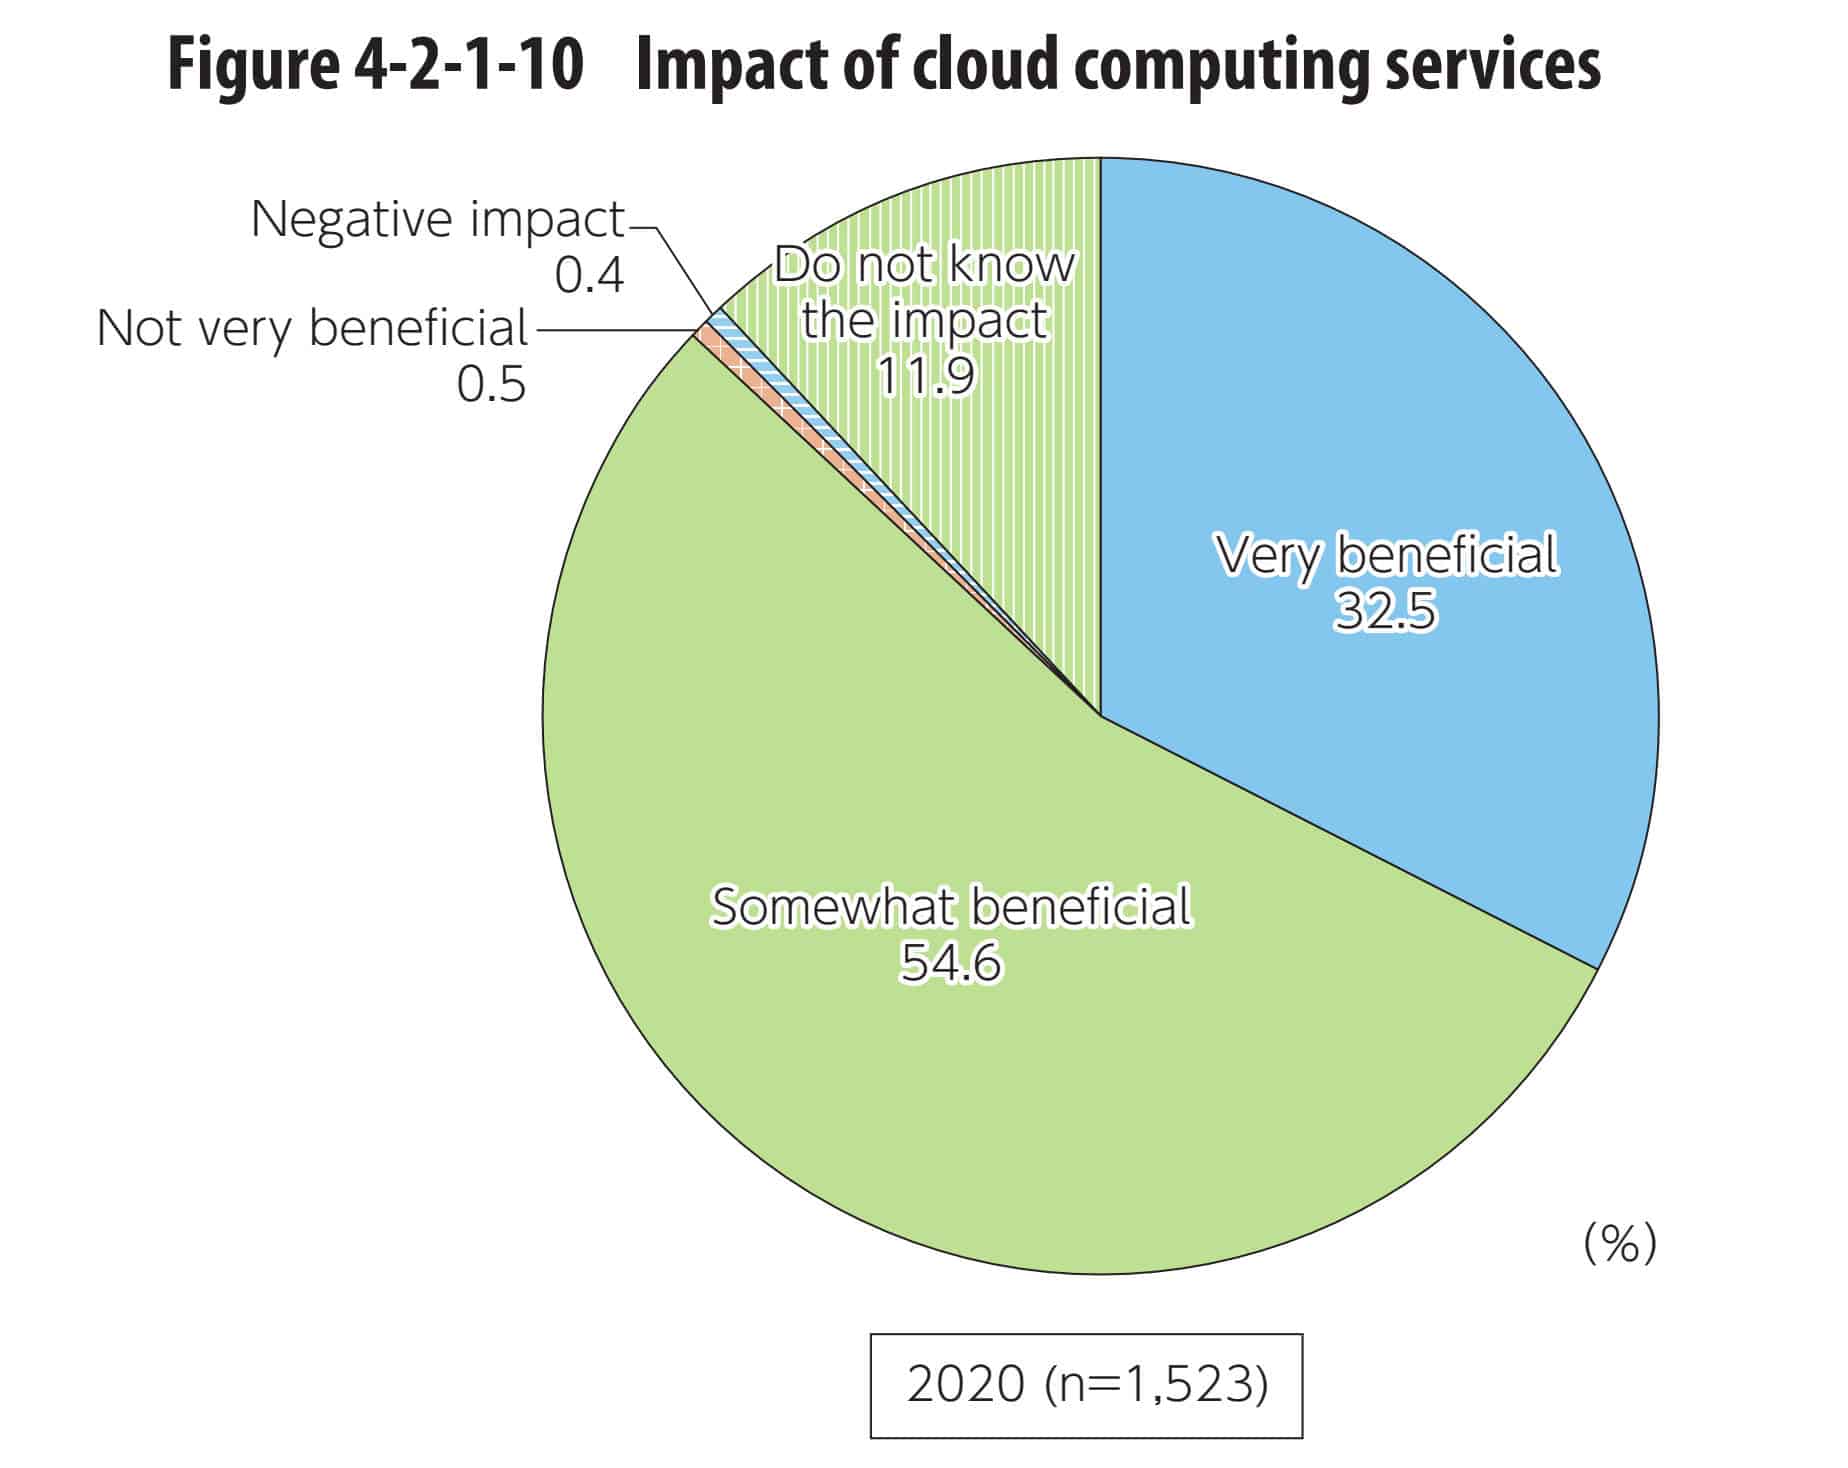 Impact of Cloud Computing services among Japanese enterprises